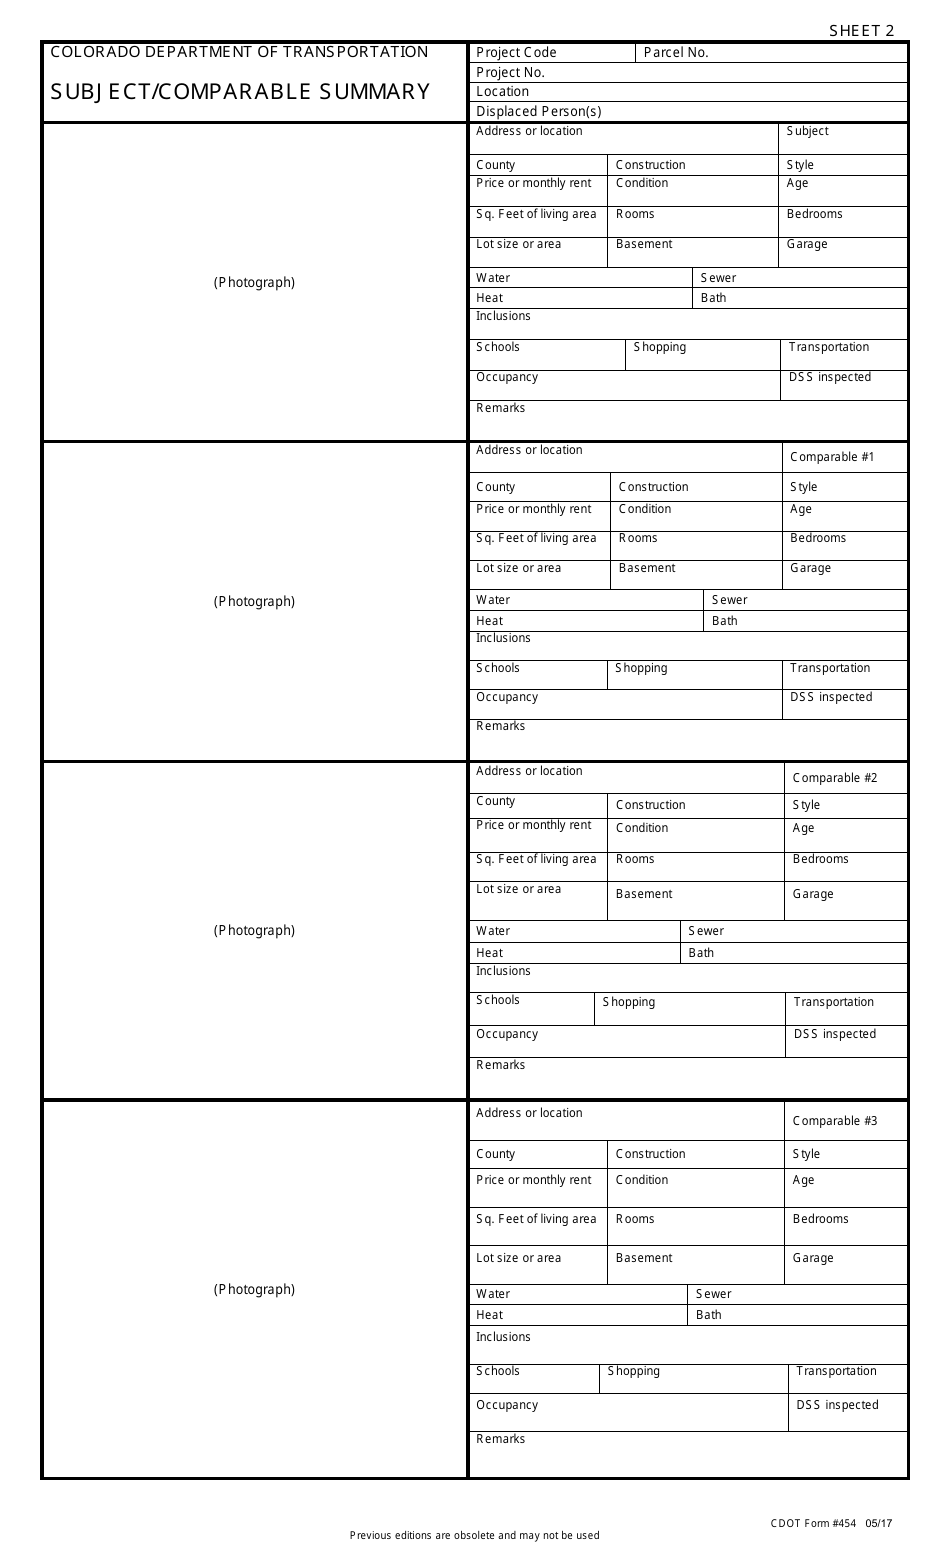 CDOT Form 454 Subject / Comparable Summary - Colorado, Page 1